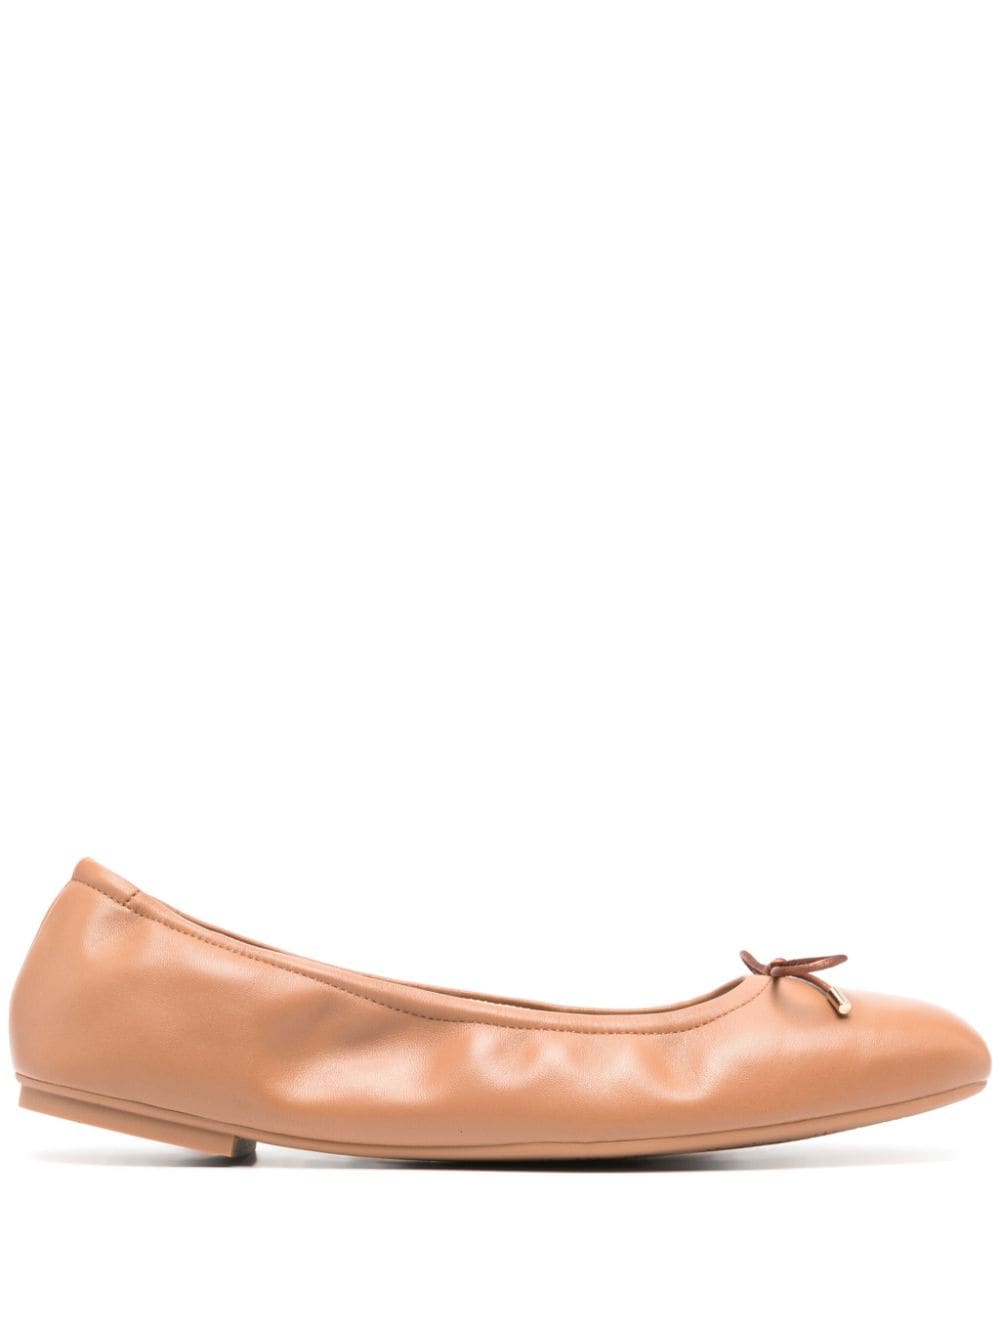 Bardot ballerina shoes